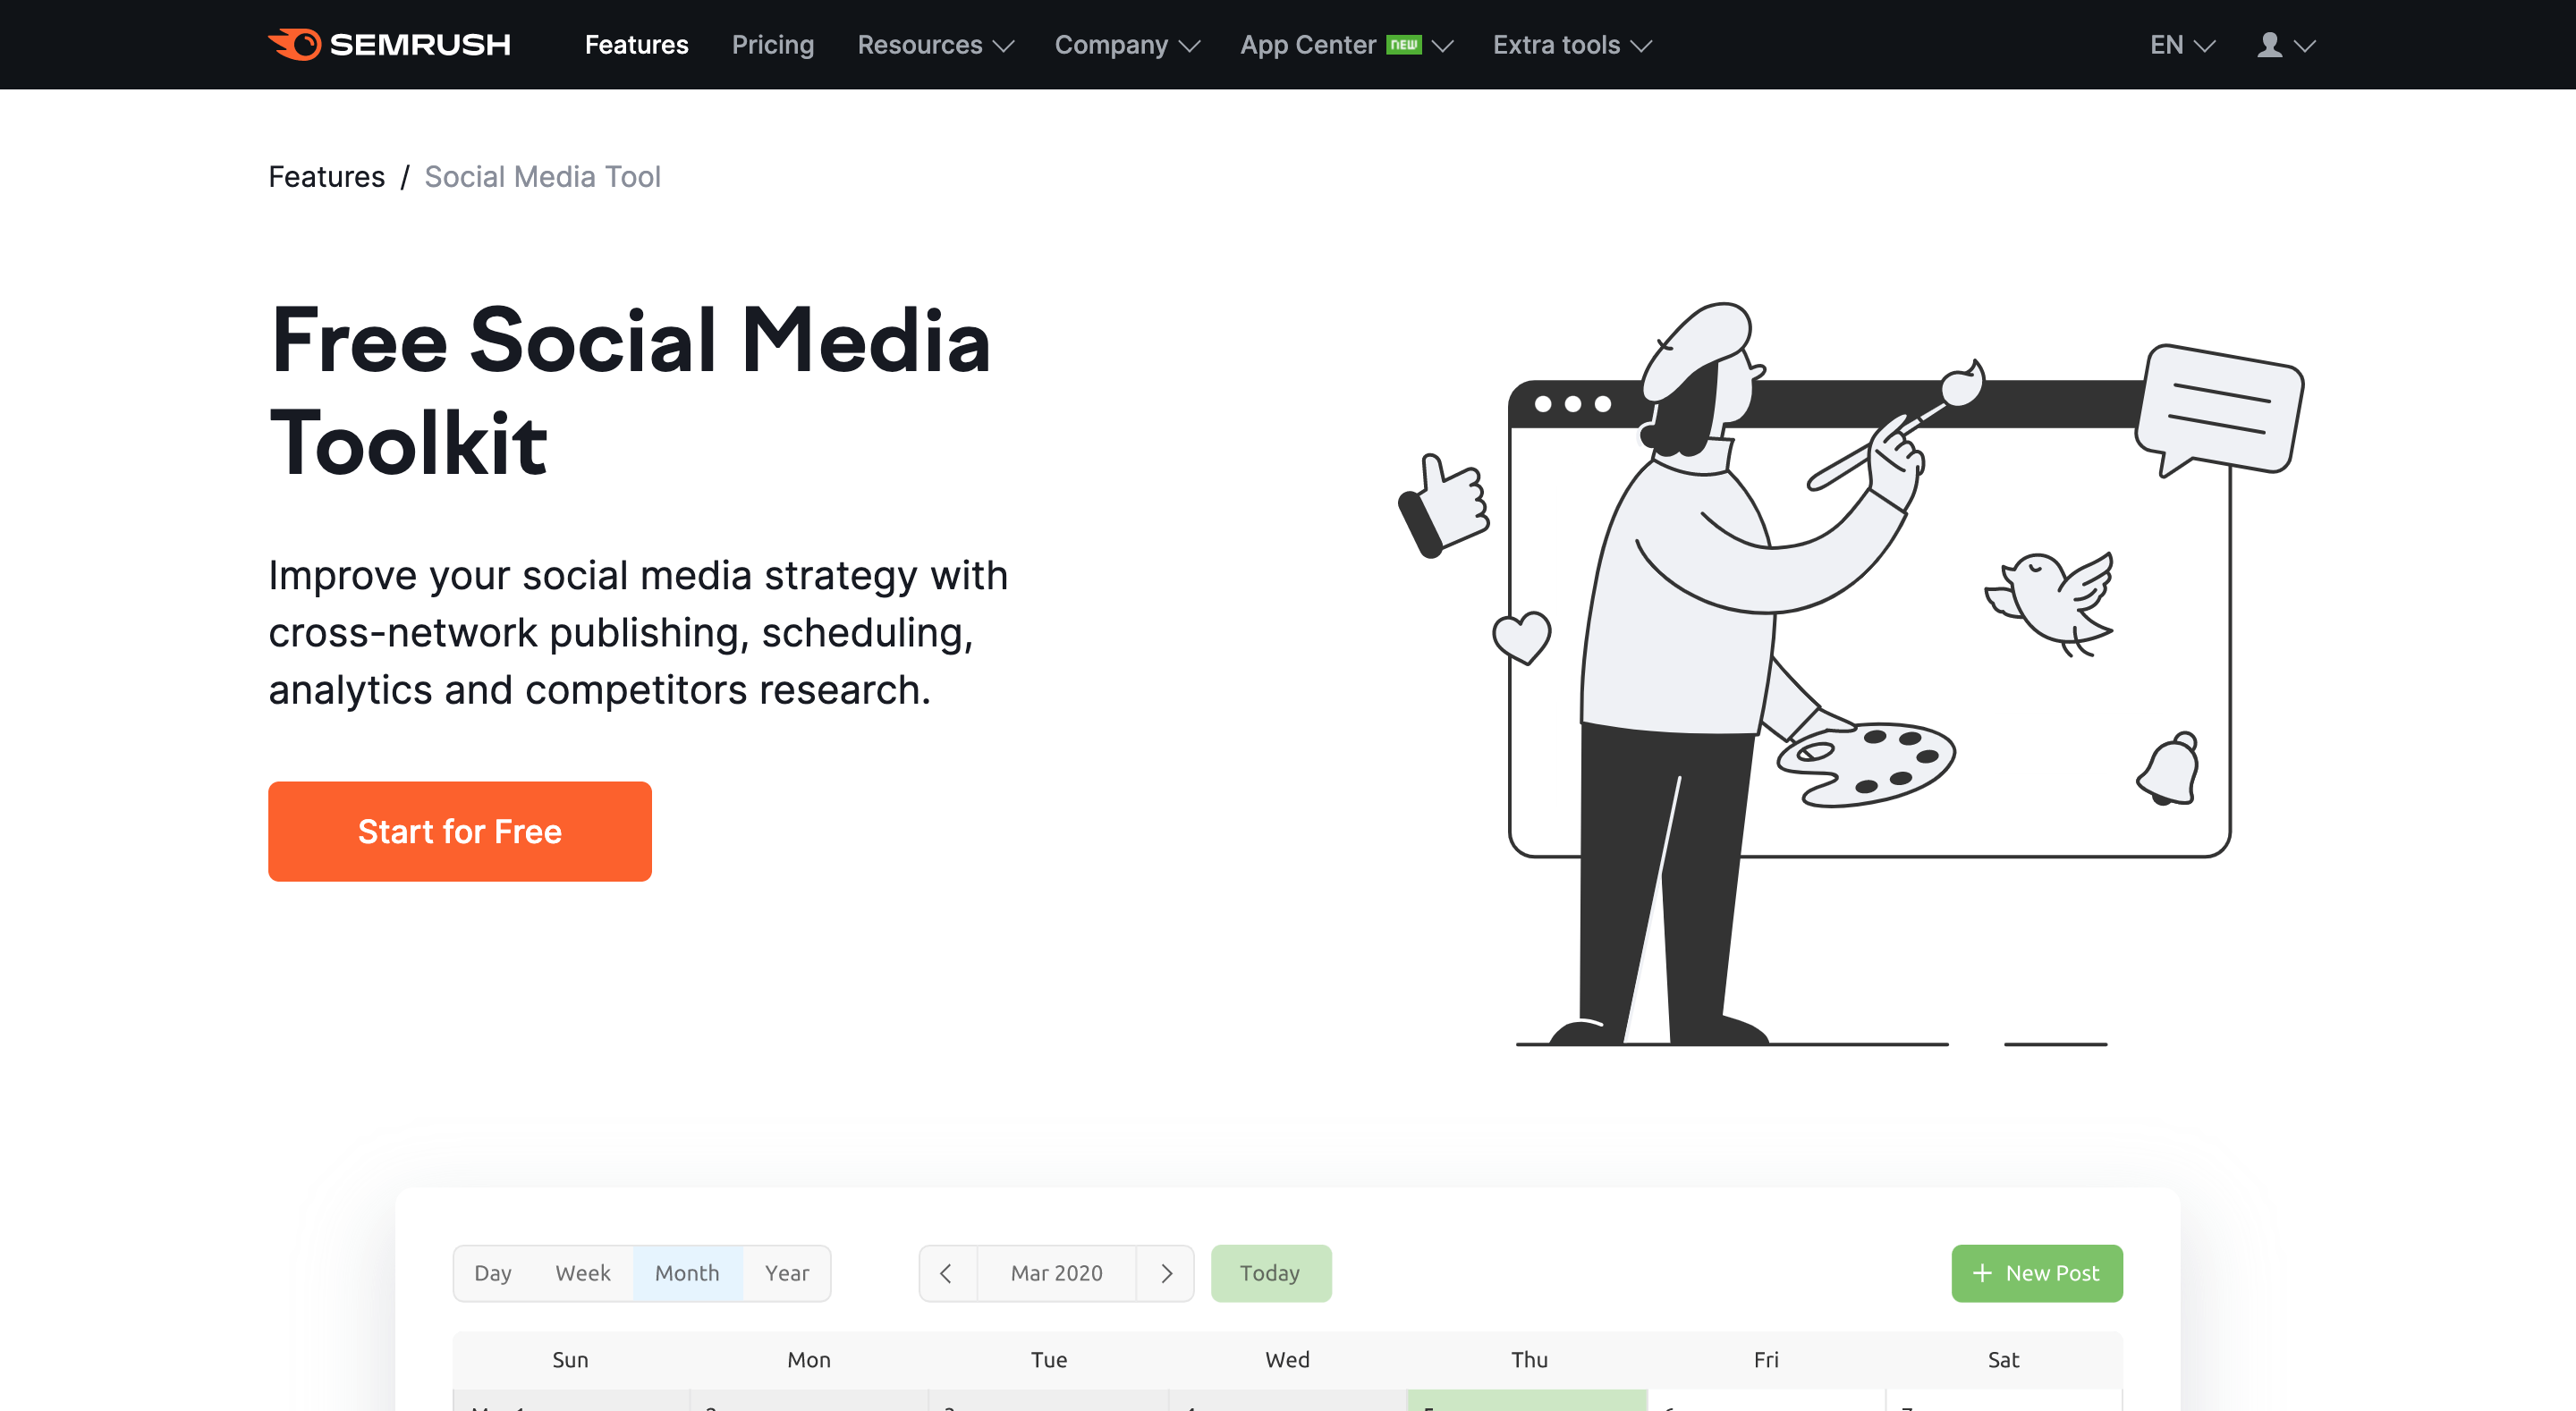 Semrush's social media toolkit